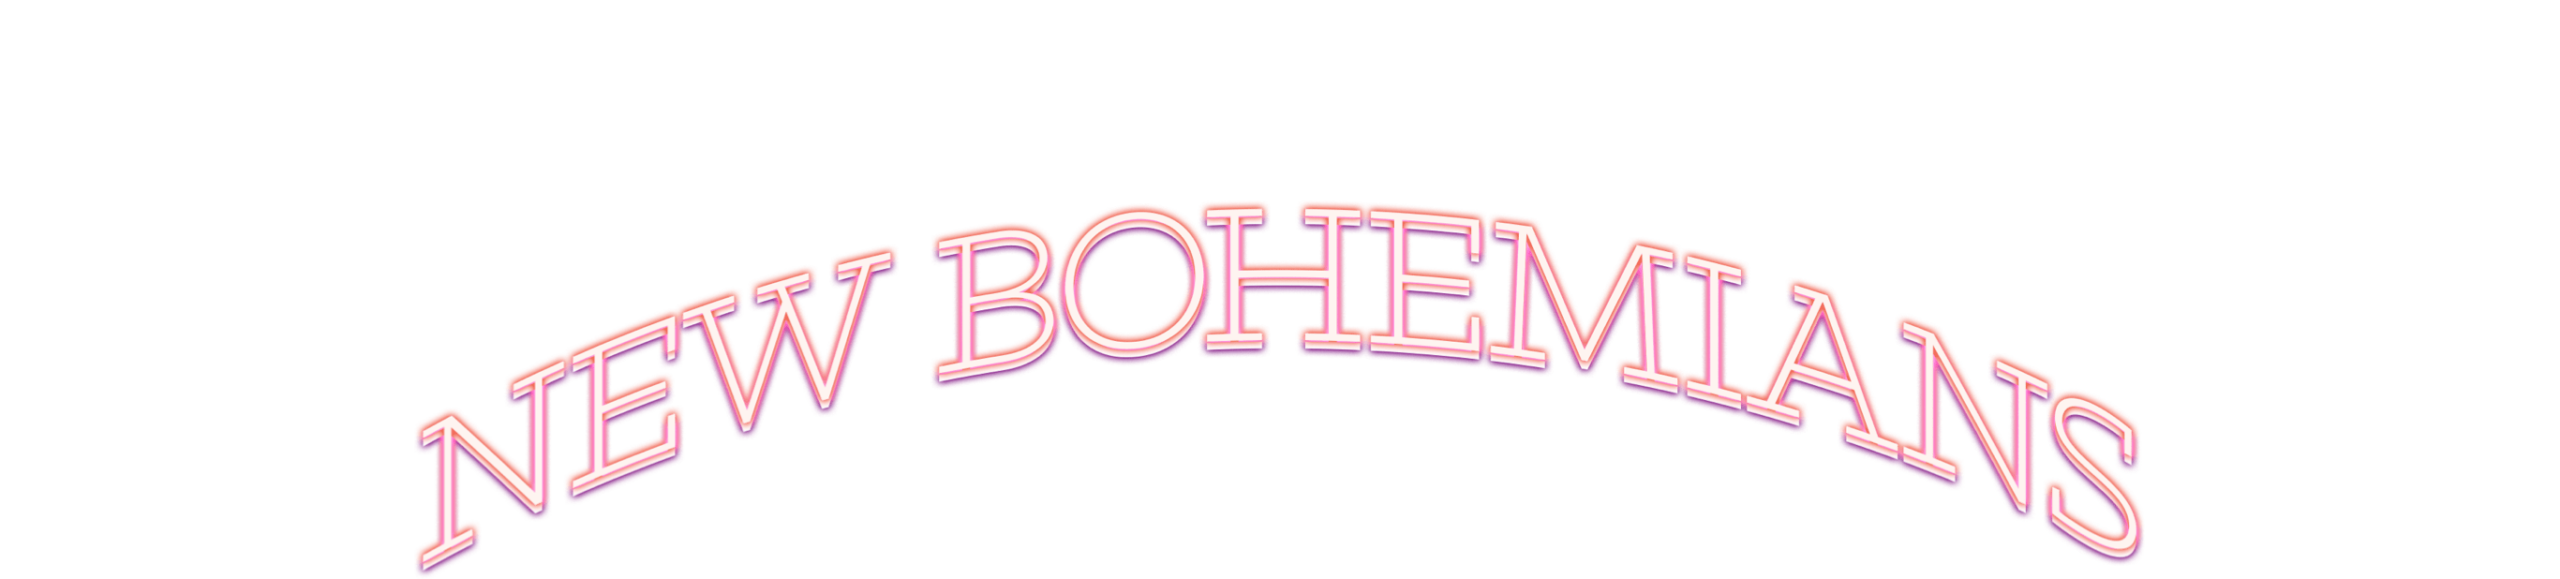 New Bohemians Logo c-min